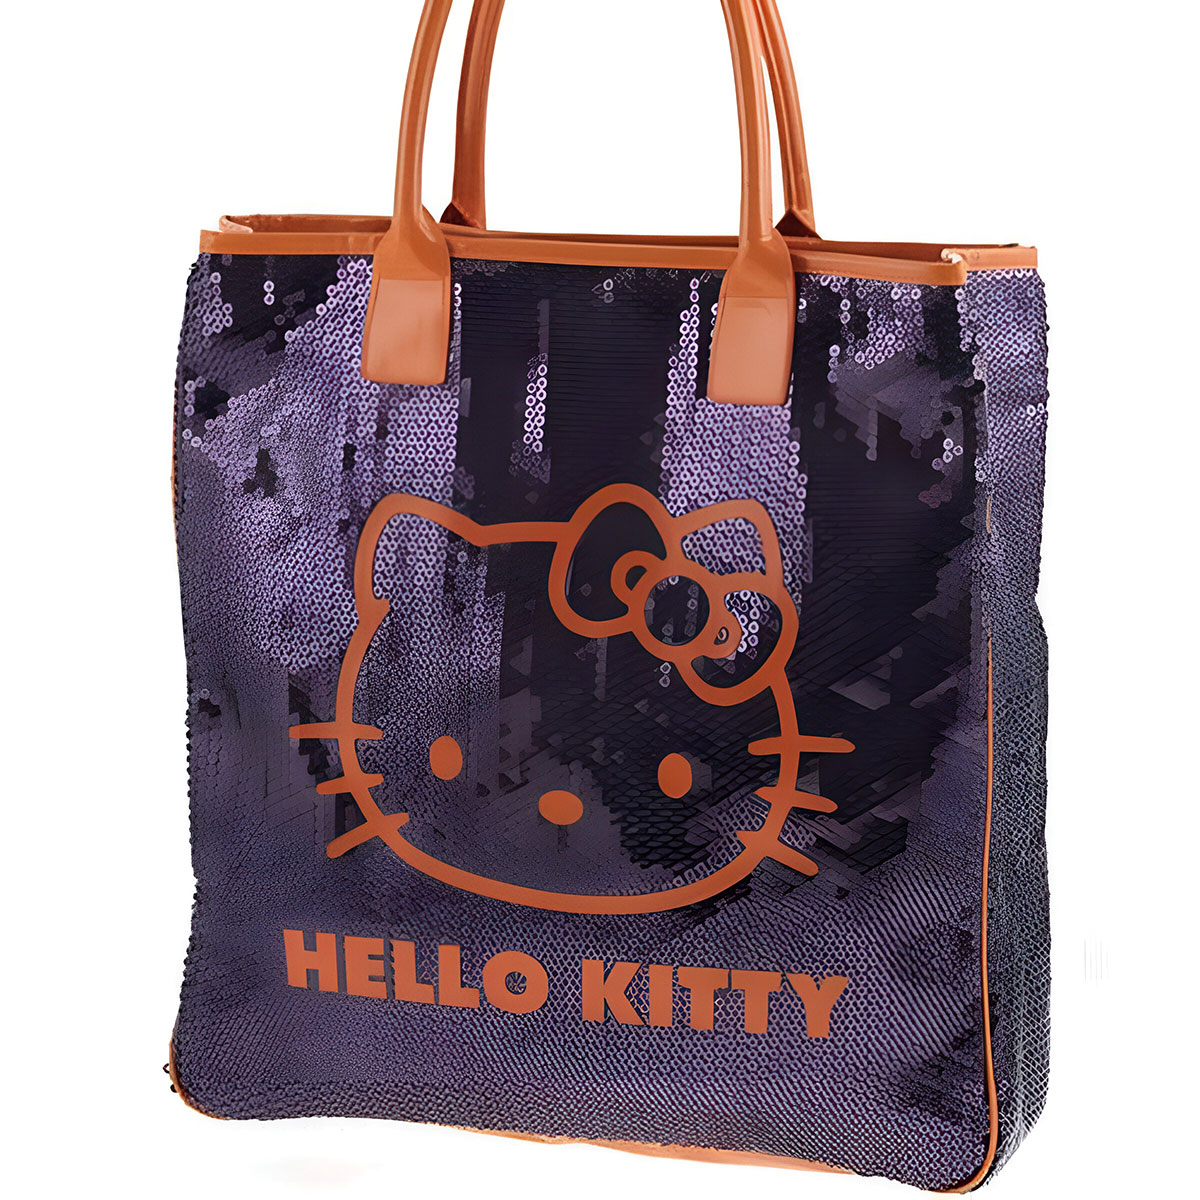 Sac cabas Hello Kitty Sequins par Camomilla Milano